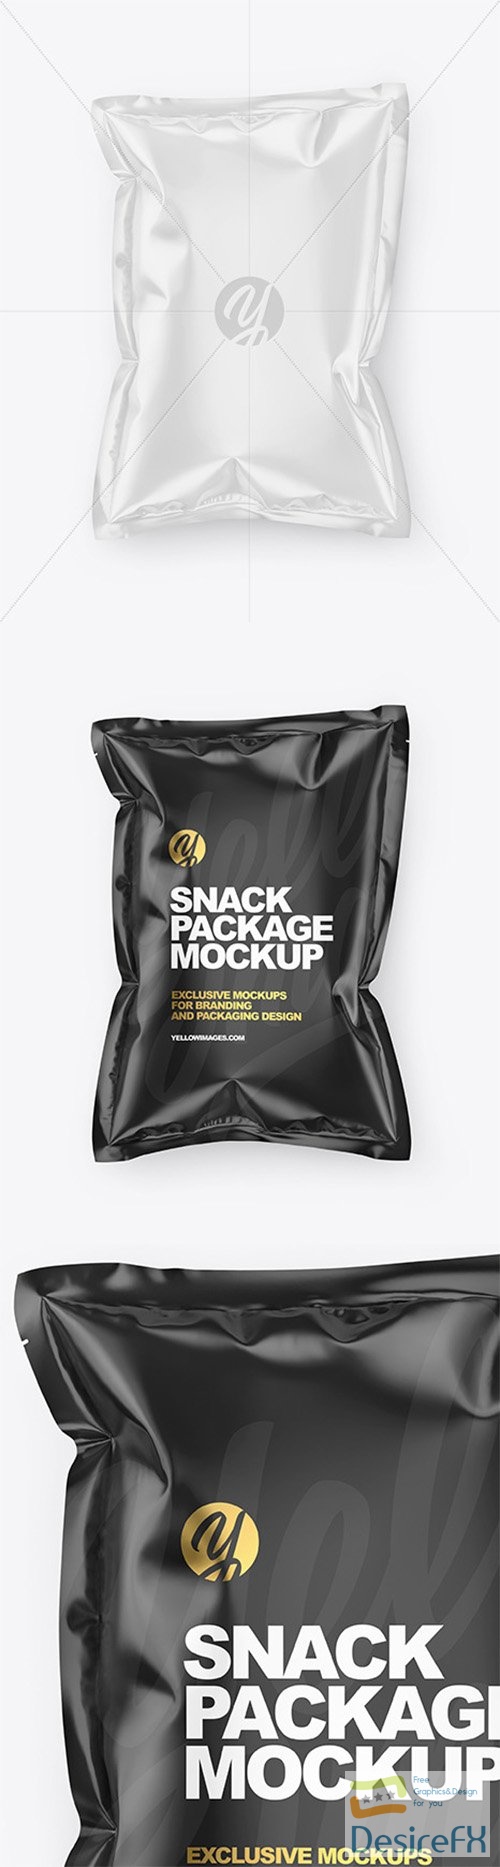 Glossy Snack Package Mockup 78538 TIF